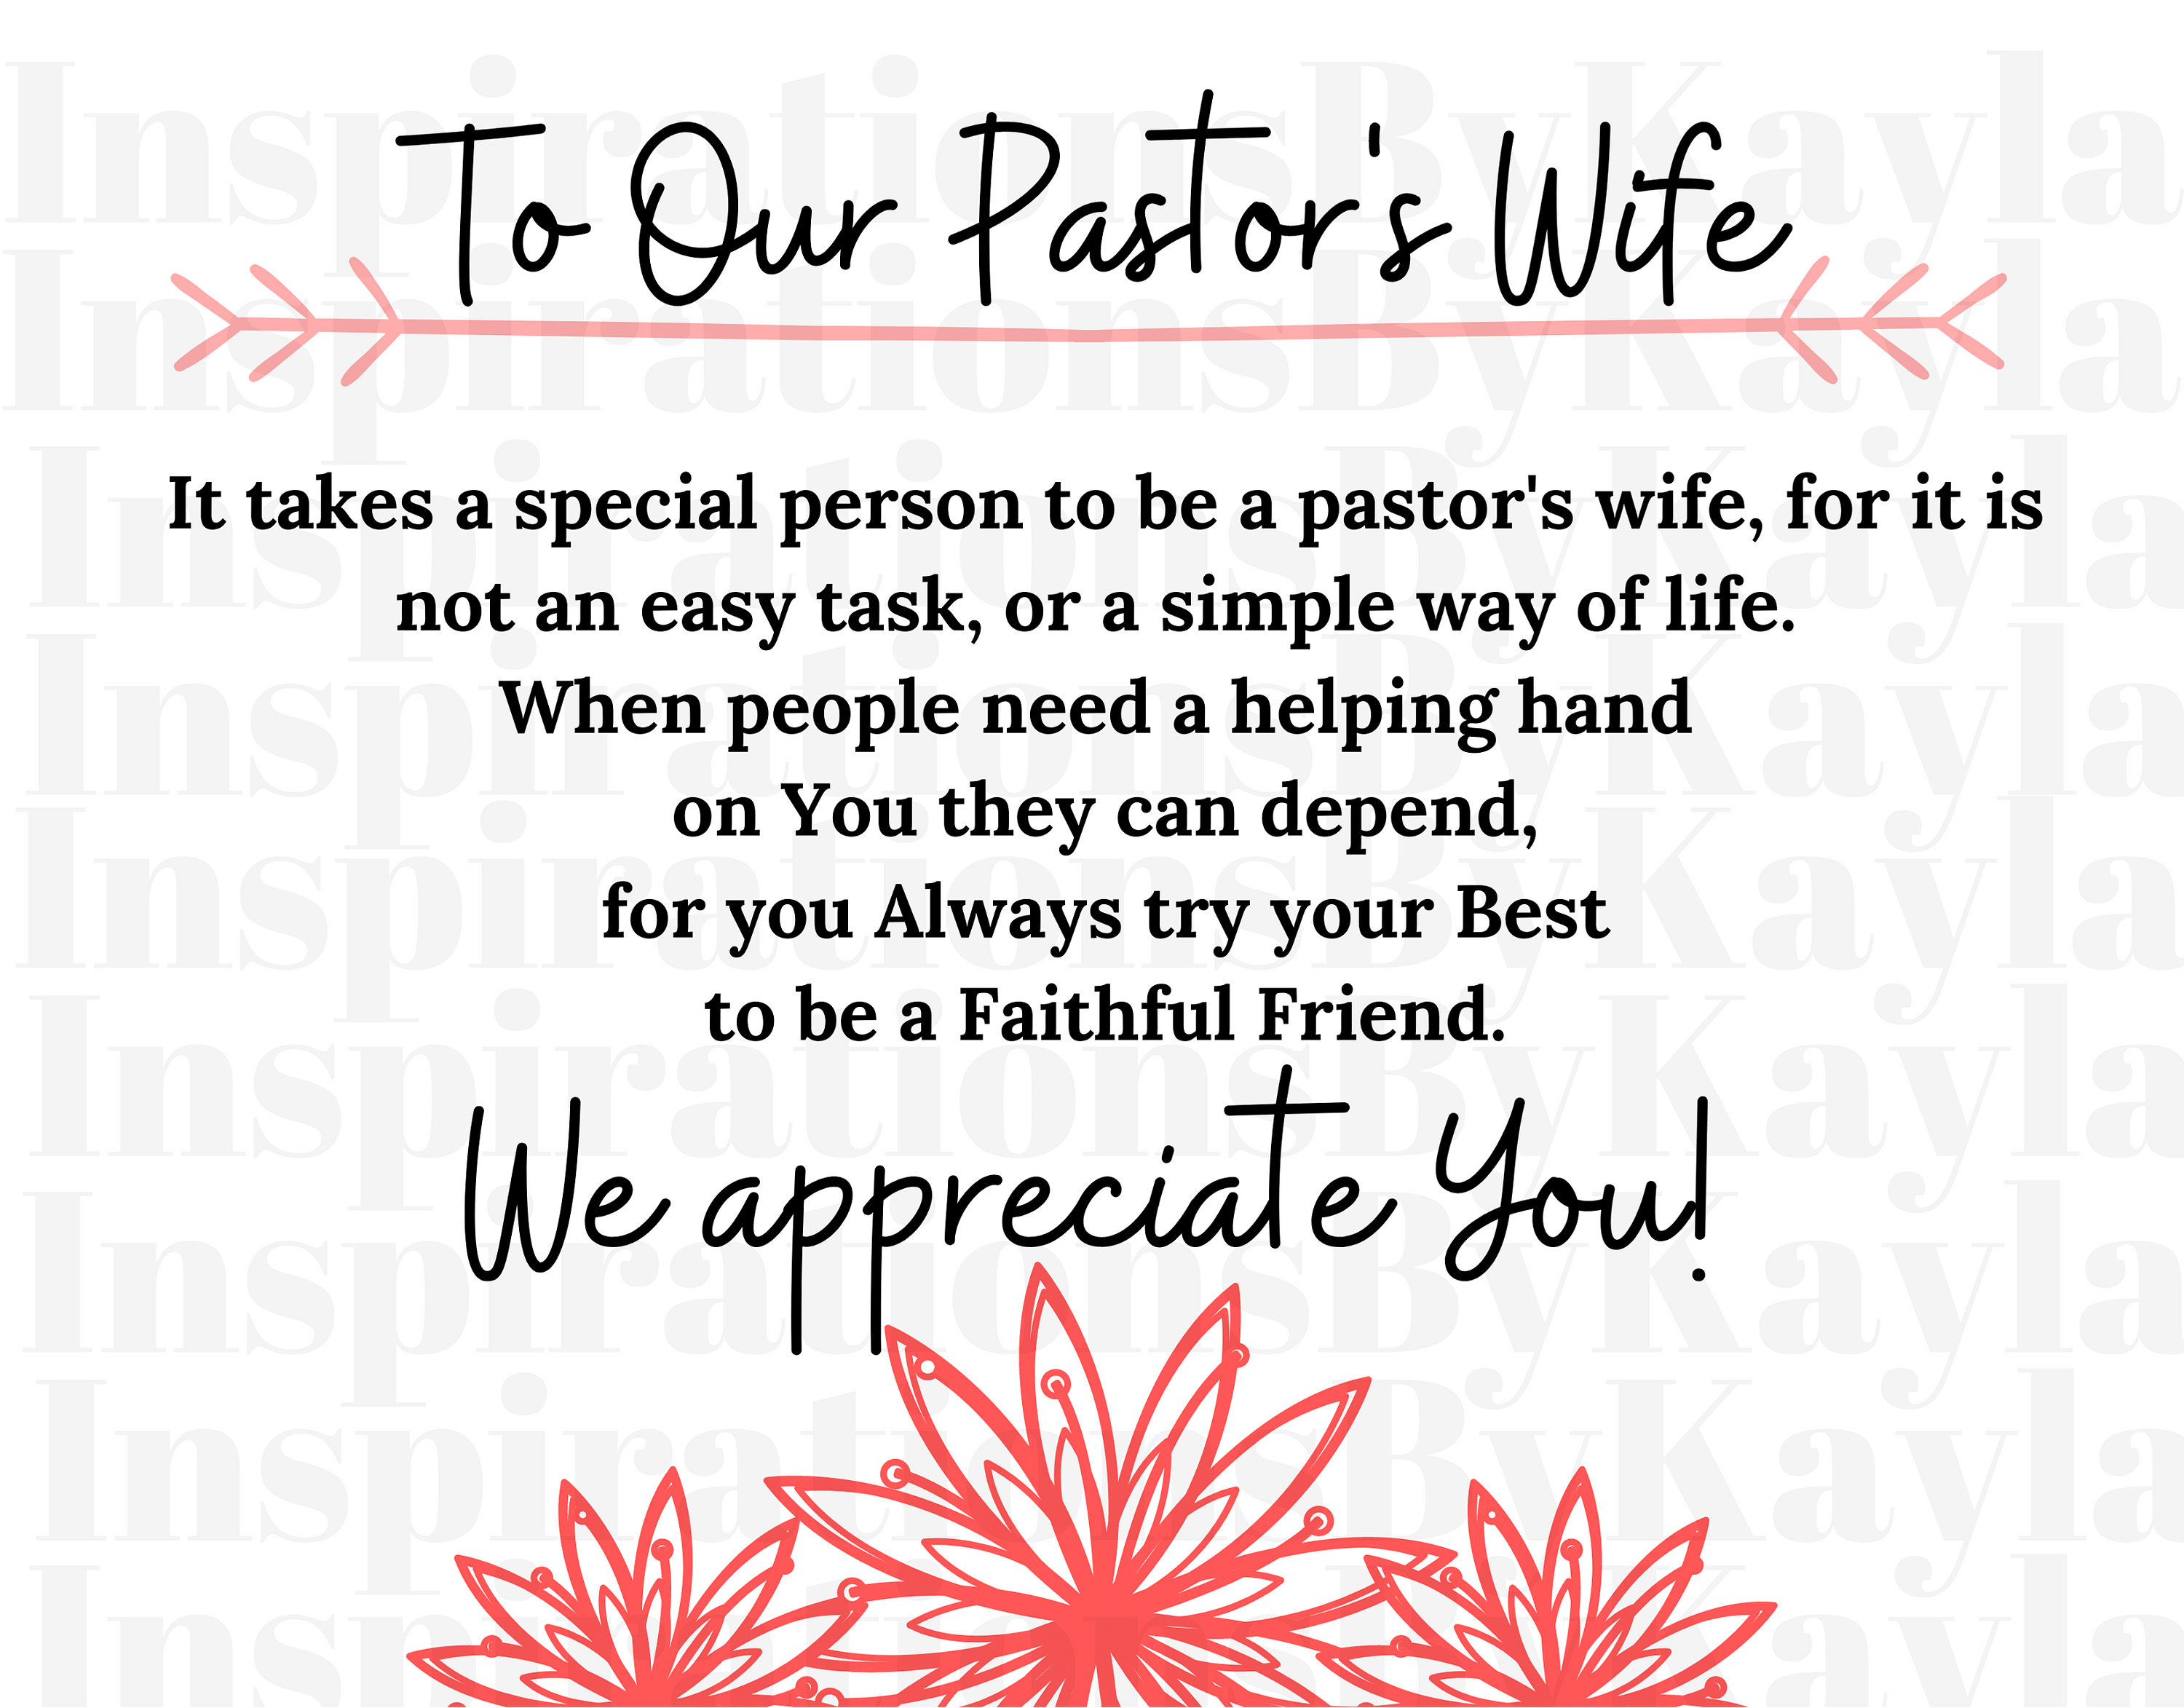 Pastors Wife Appreciation Card Pastor Wife Appreciation image pic